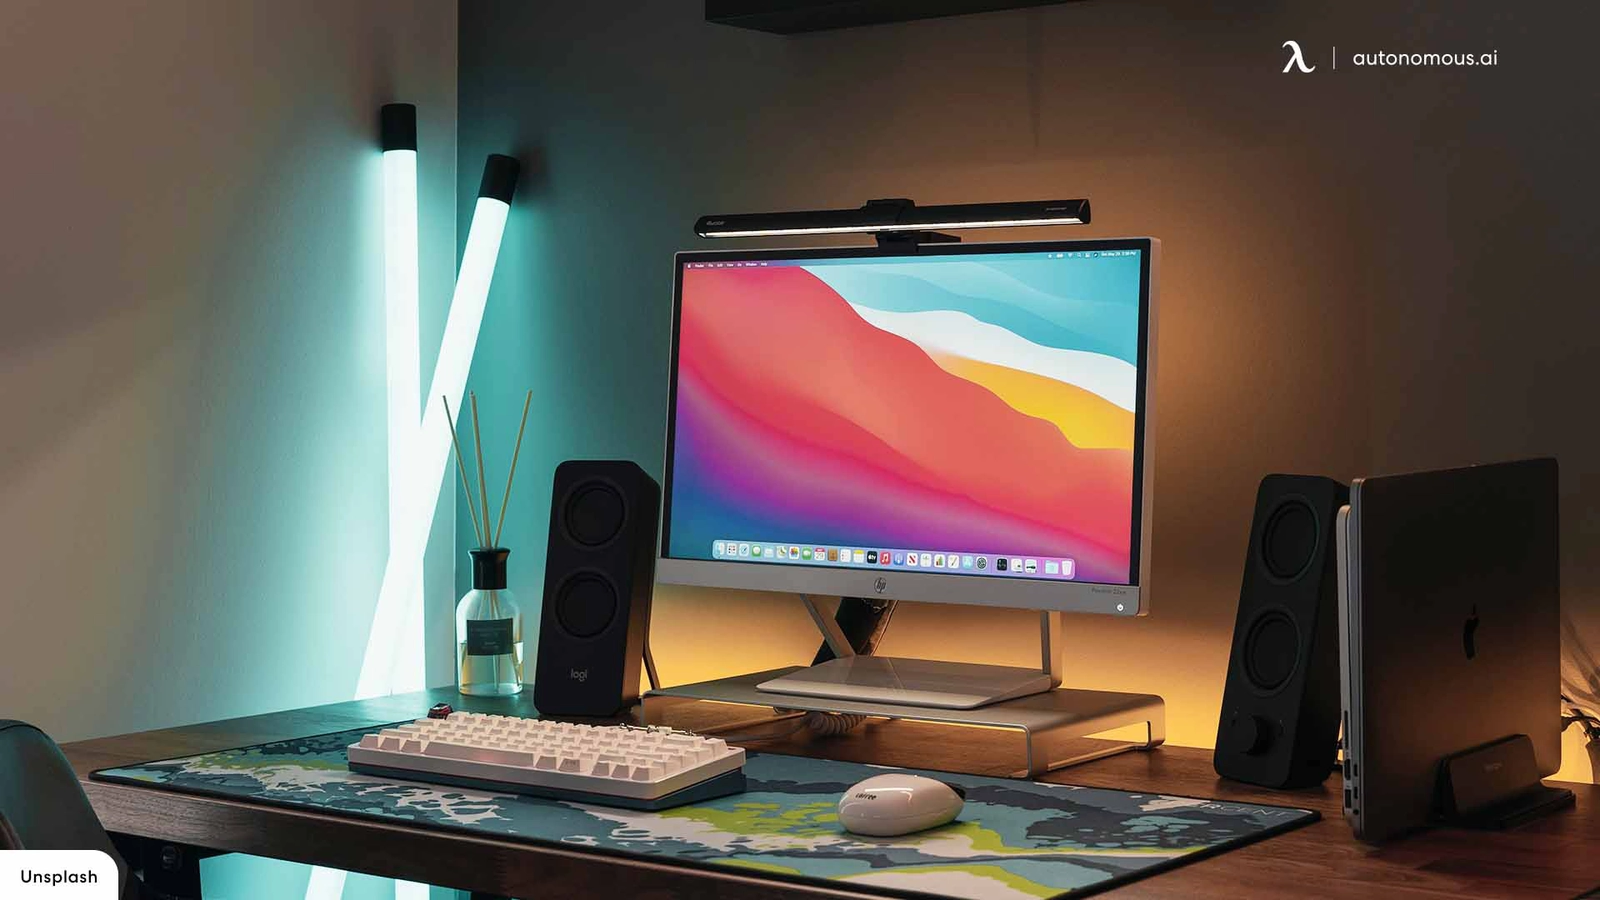 9 Computer Light Bars for Desks to Improve Lighting Ergonomics